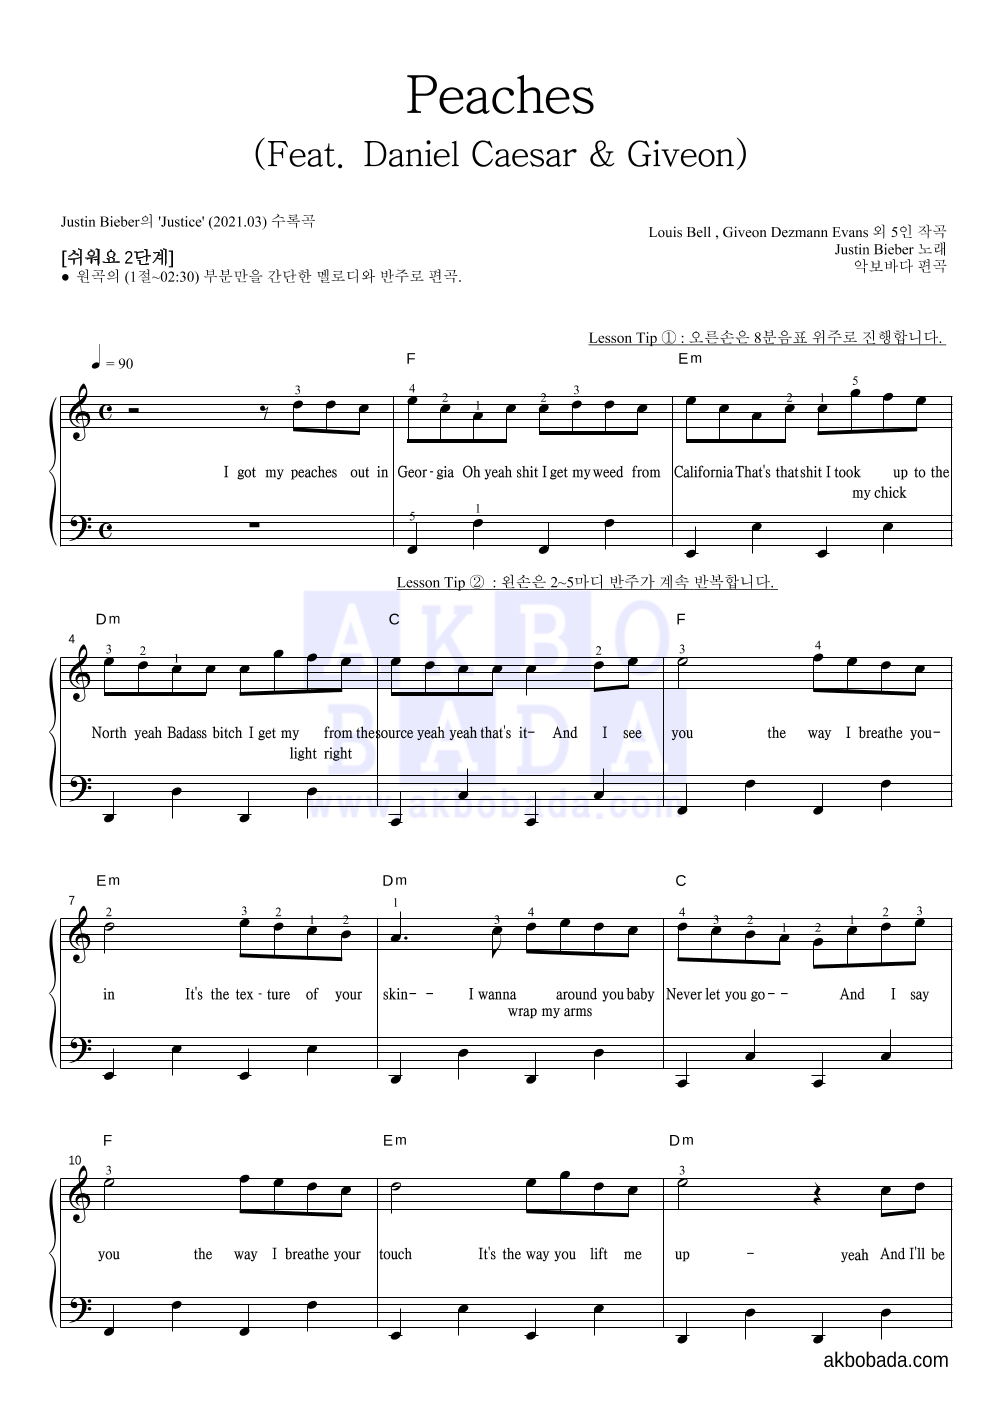 Justin Bieber - Peaches (Feat. Daniel Caesar & Giveon) 피아노2단-쉬워요 악보 